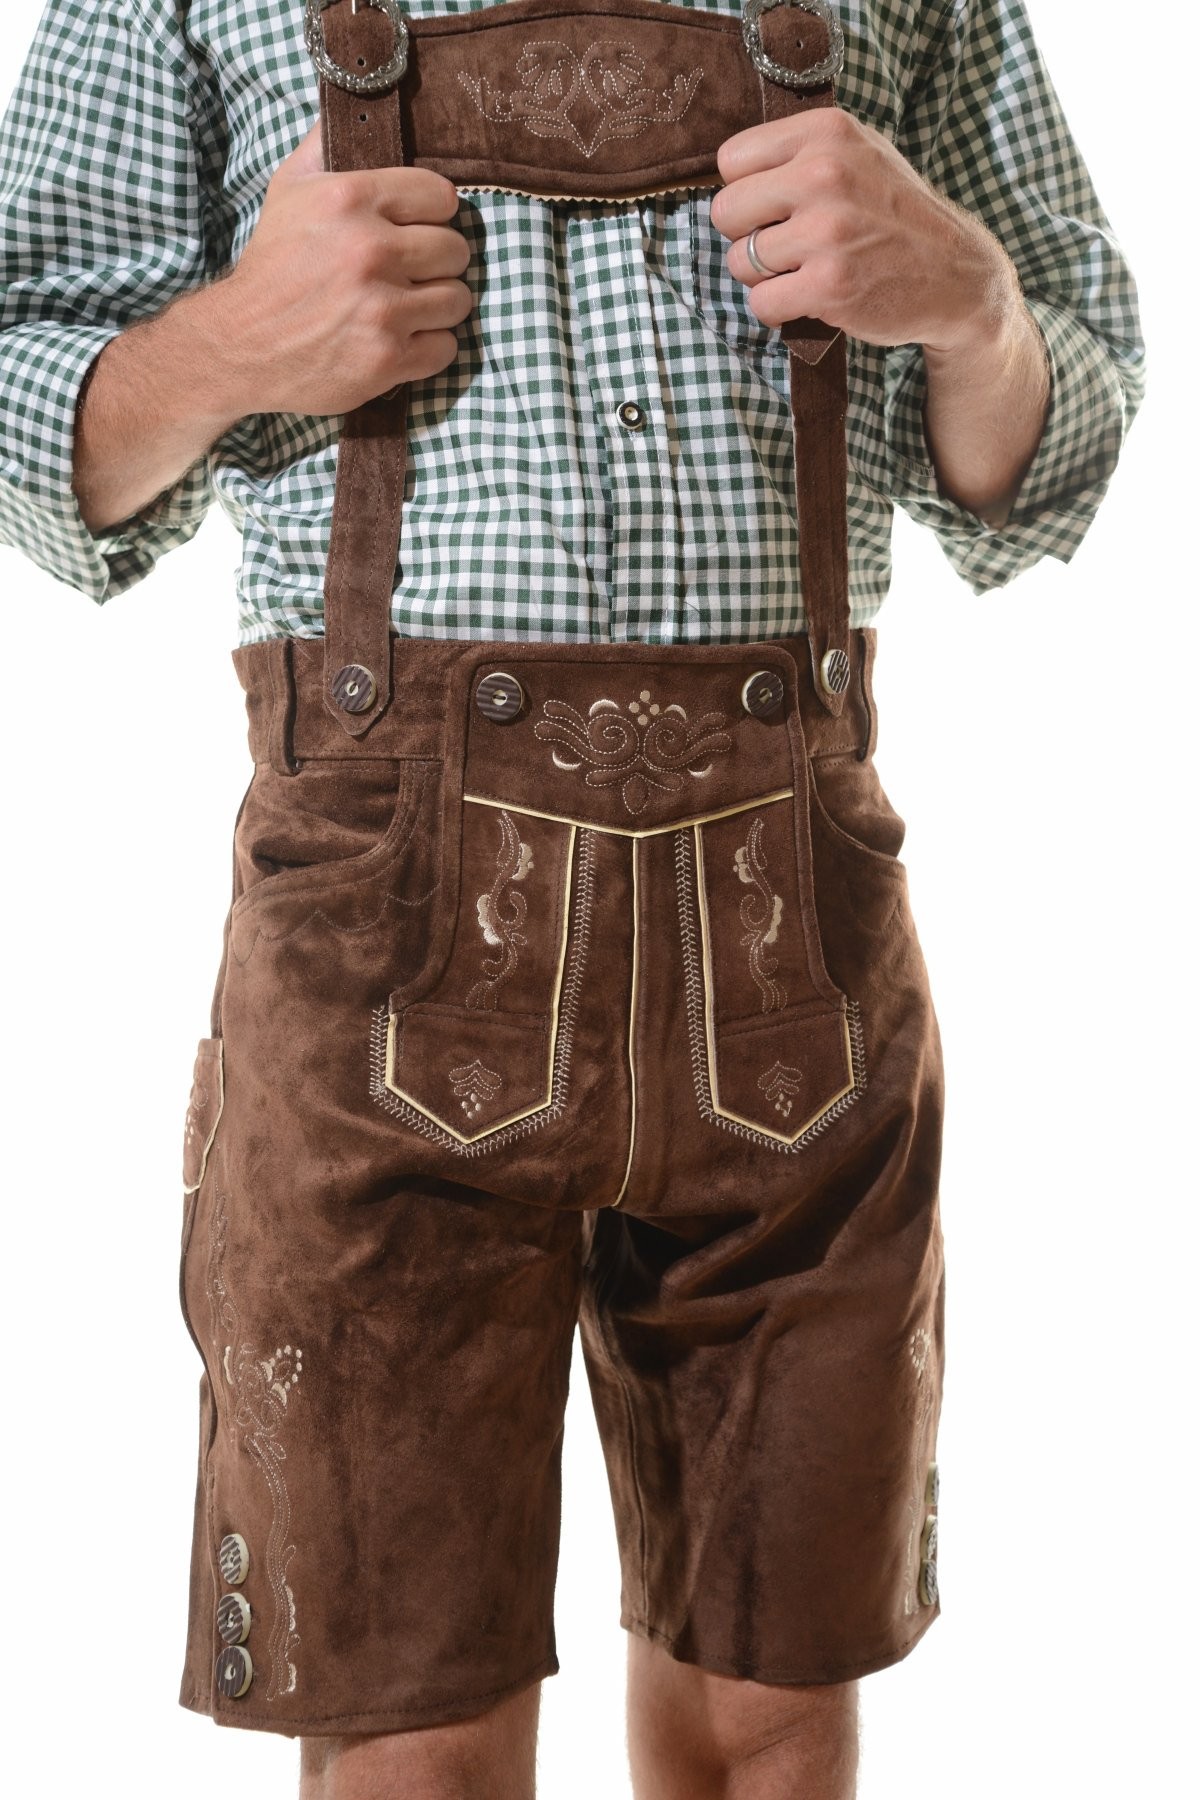 Costumes Lederhose Leather Pants Oktoberfest Leather Pants with Belt 46-64 